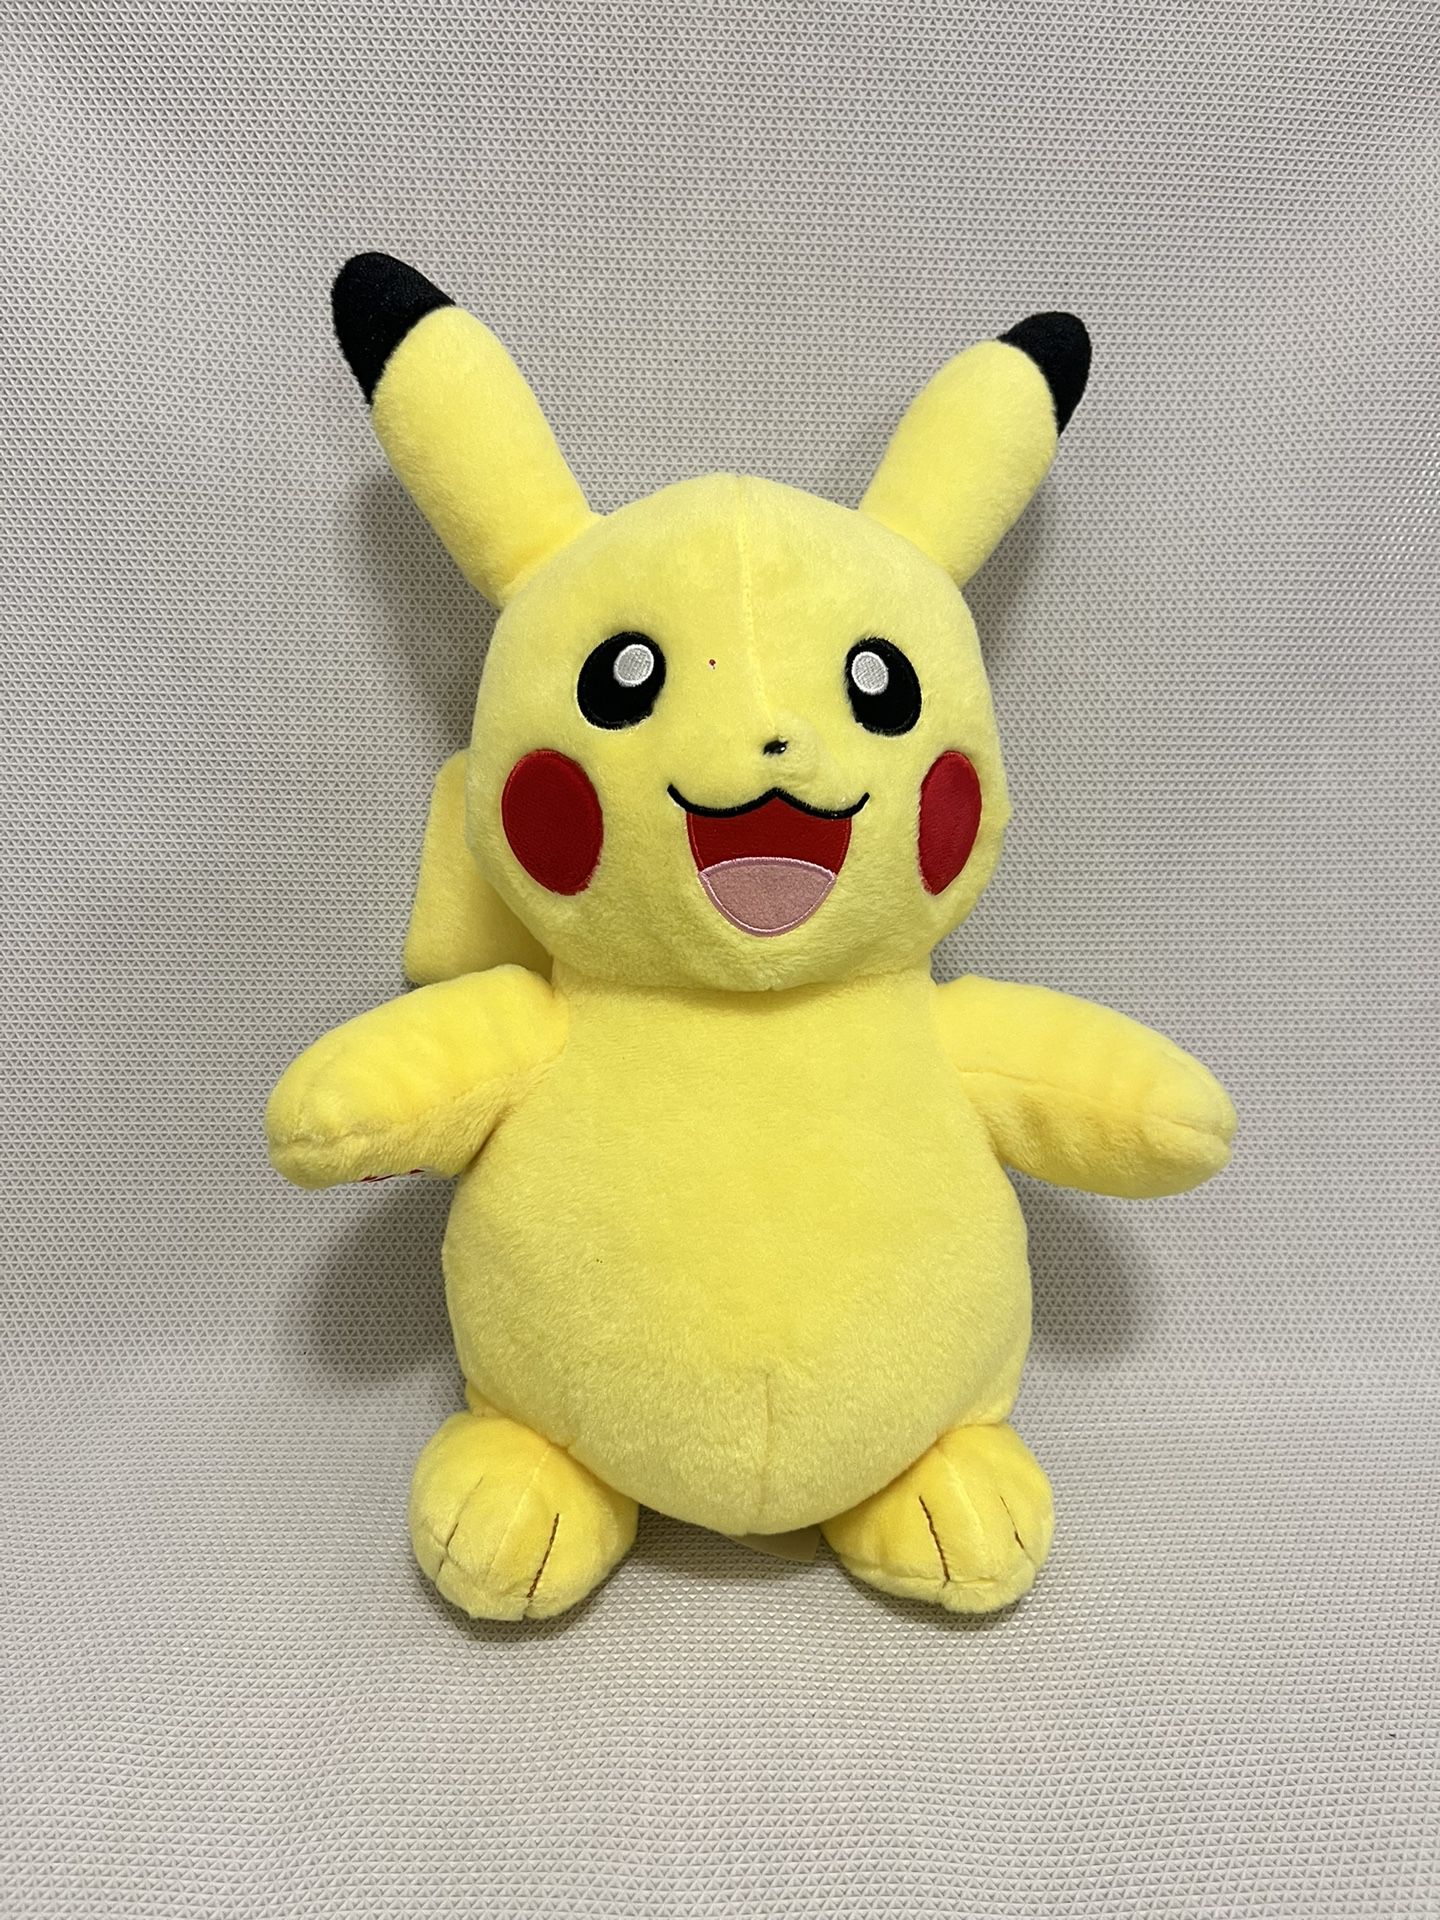 Pokemon Build A Bear 18" Pikachu Stuffed Plush Toy BAB. Nintendo